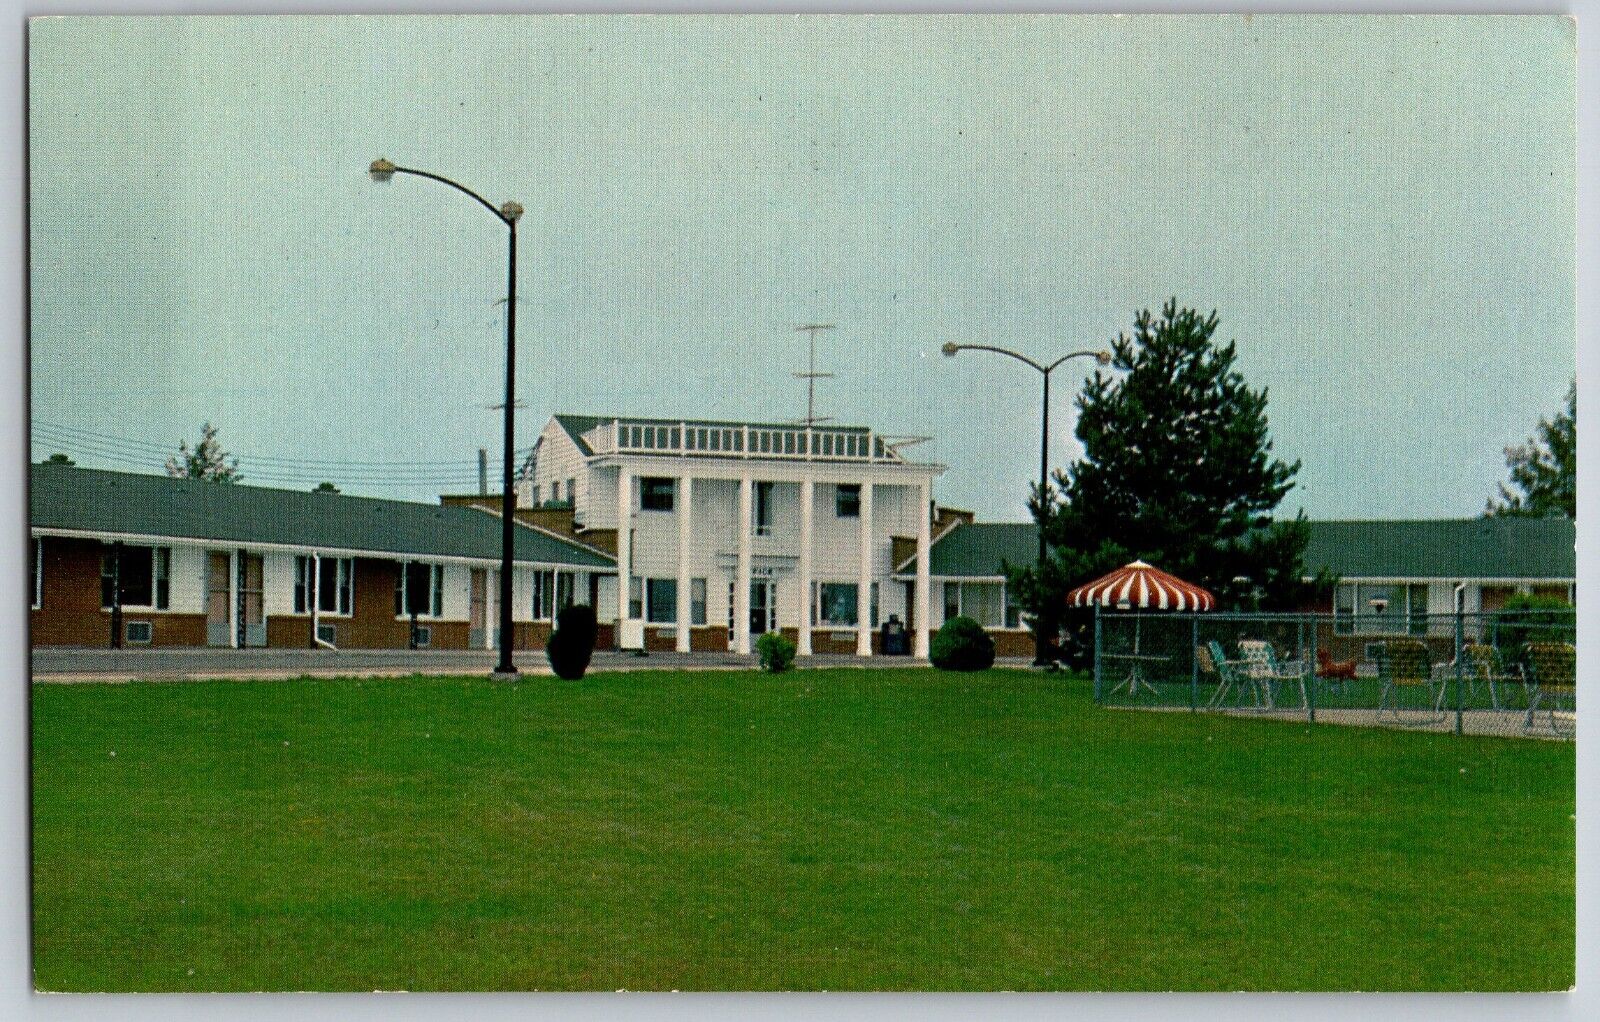 Burlington, Iowa - Voyager Inn at Junction Highway - Vintage Postcard - Unposted